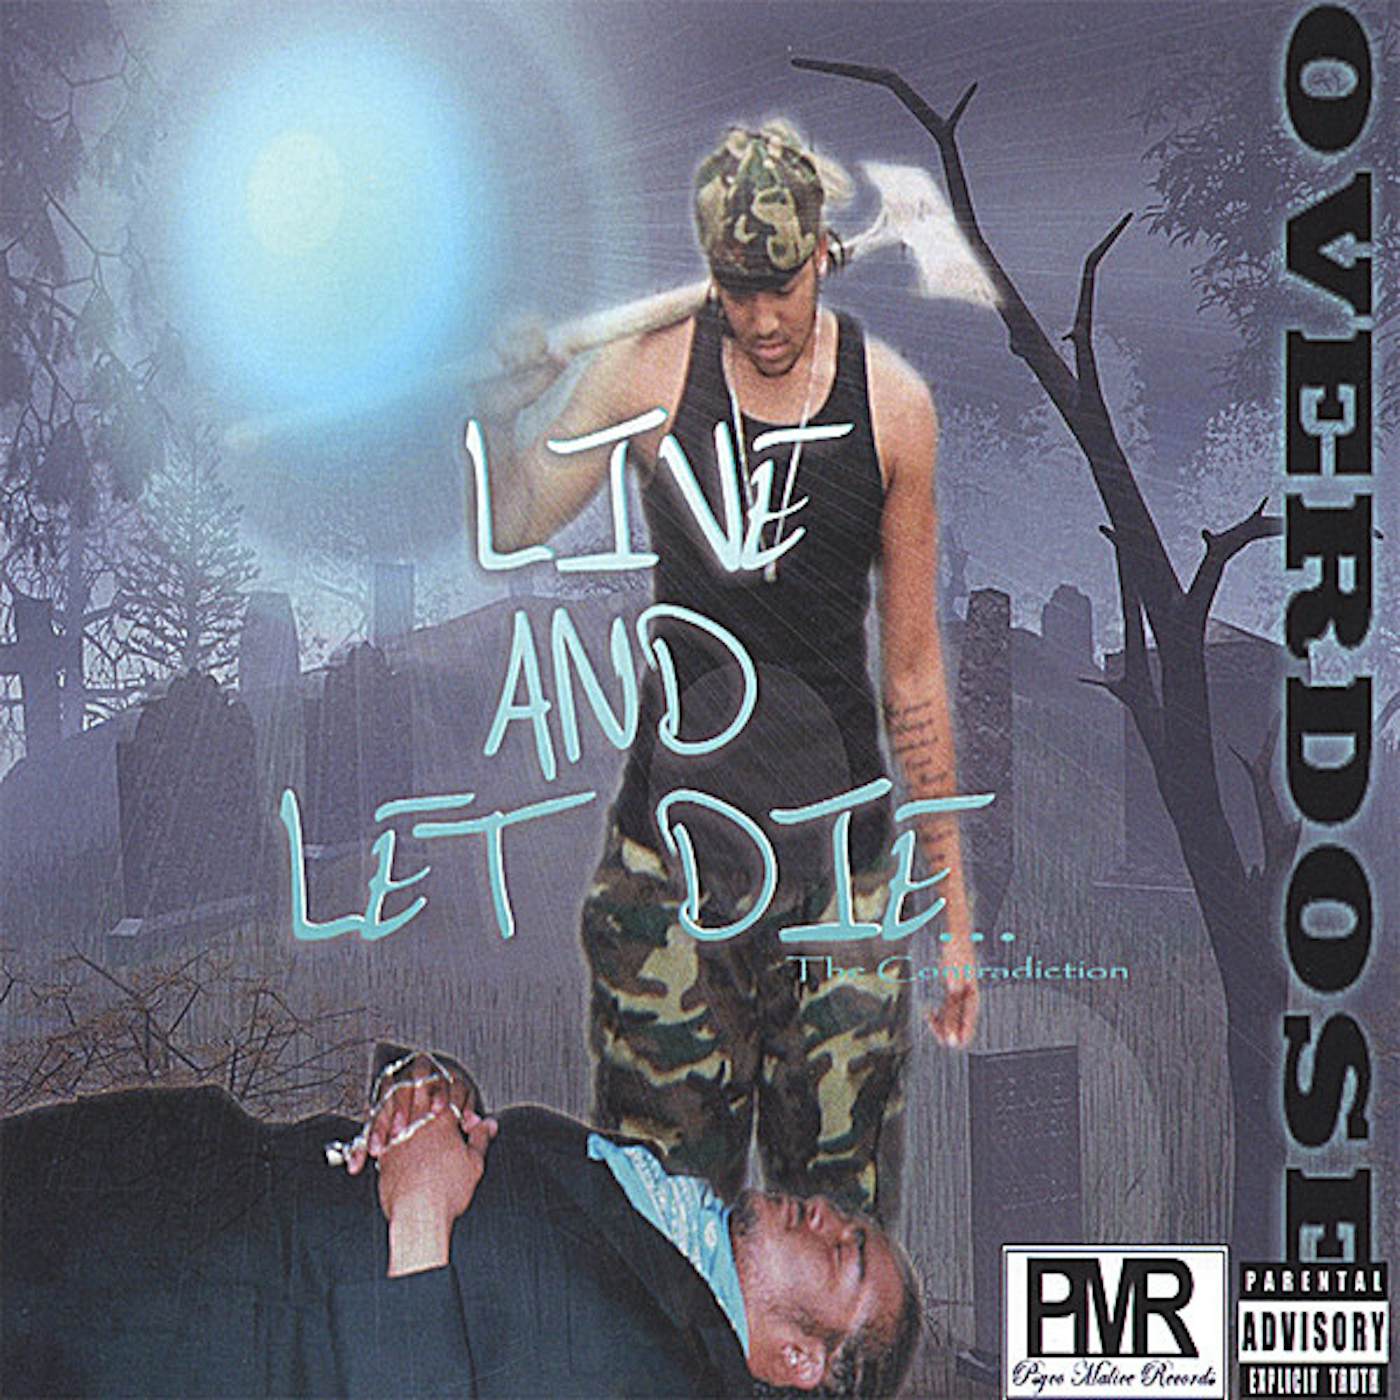 Overdose LIVE & LET DIETHE CONTRADICTION CD